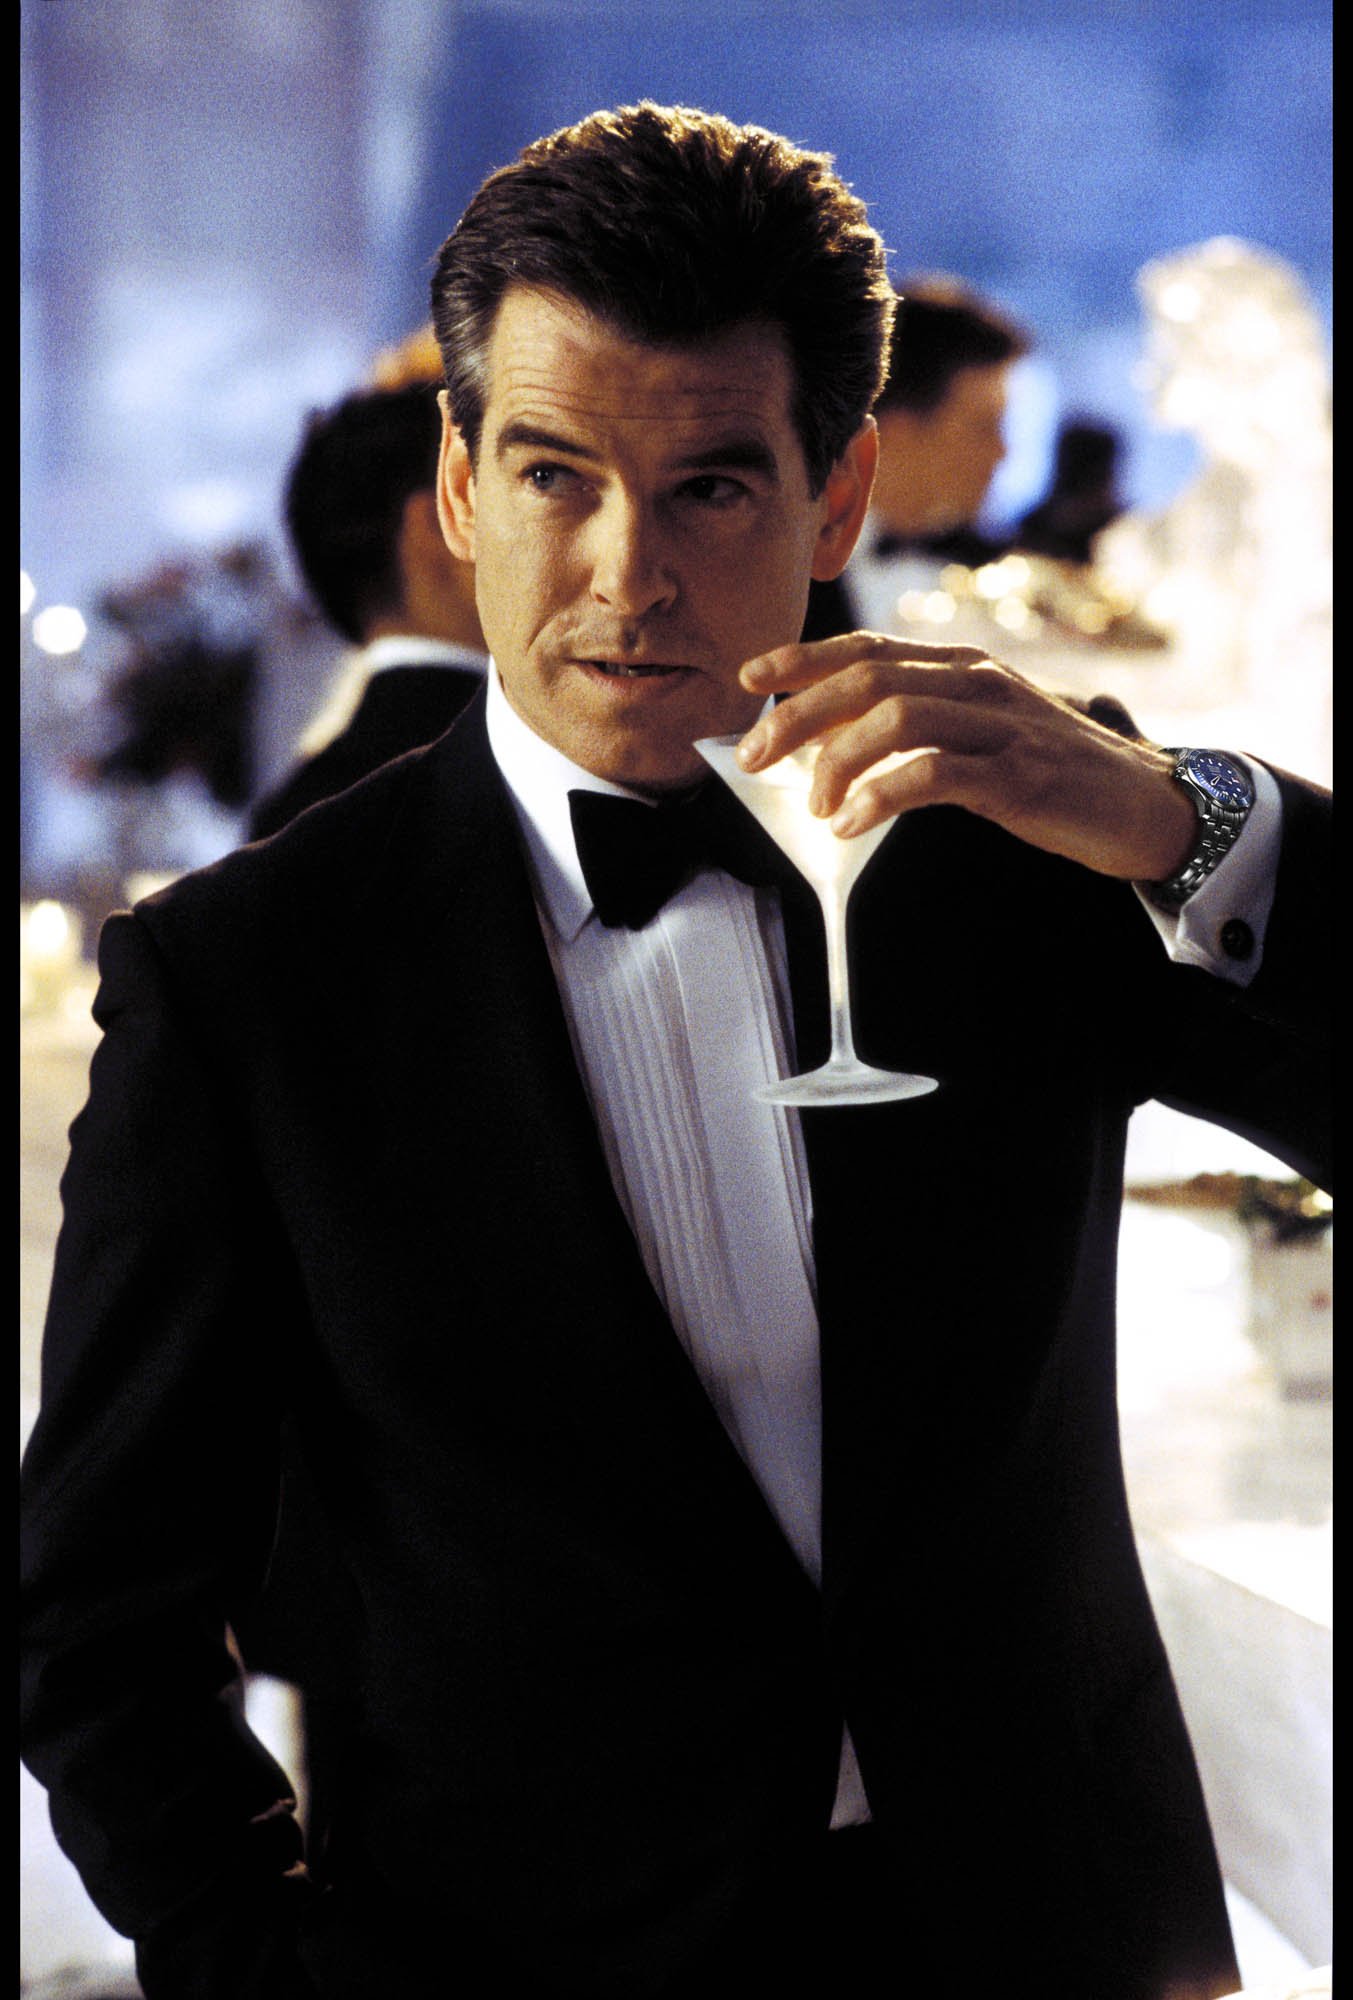 15+ Years of James Bond and His Omega Seamaster – South Coast Plaza